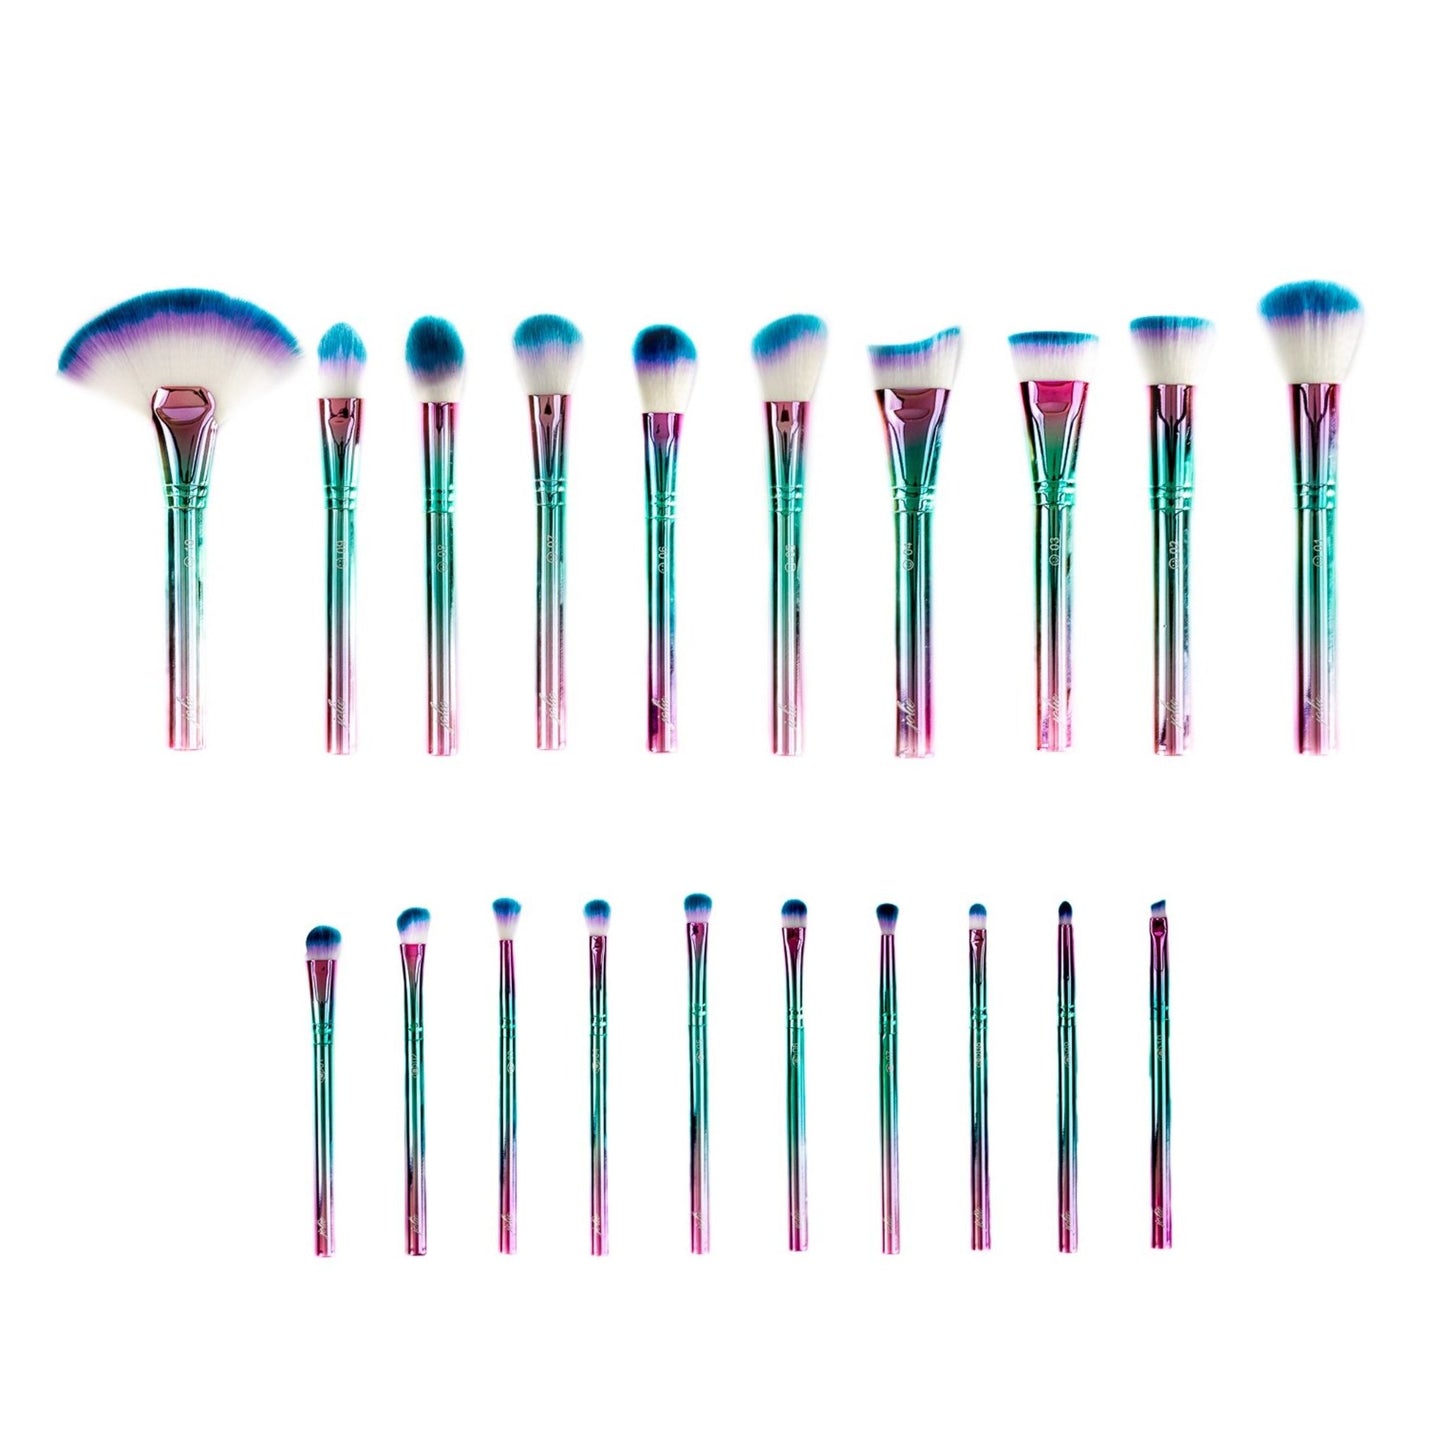 Jolie Beauty Mythical Dreamers Makeup Brush Set - 20 Professional Vegan Brushes